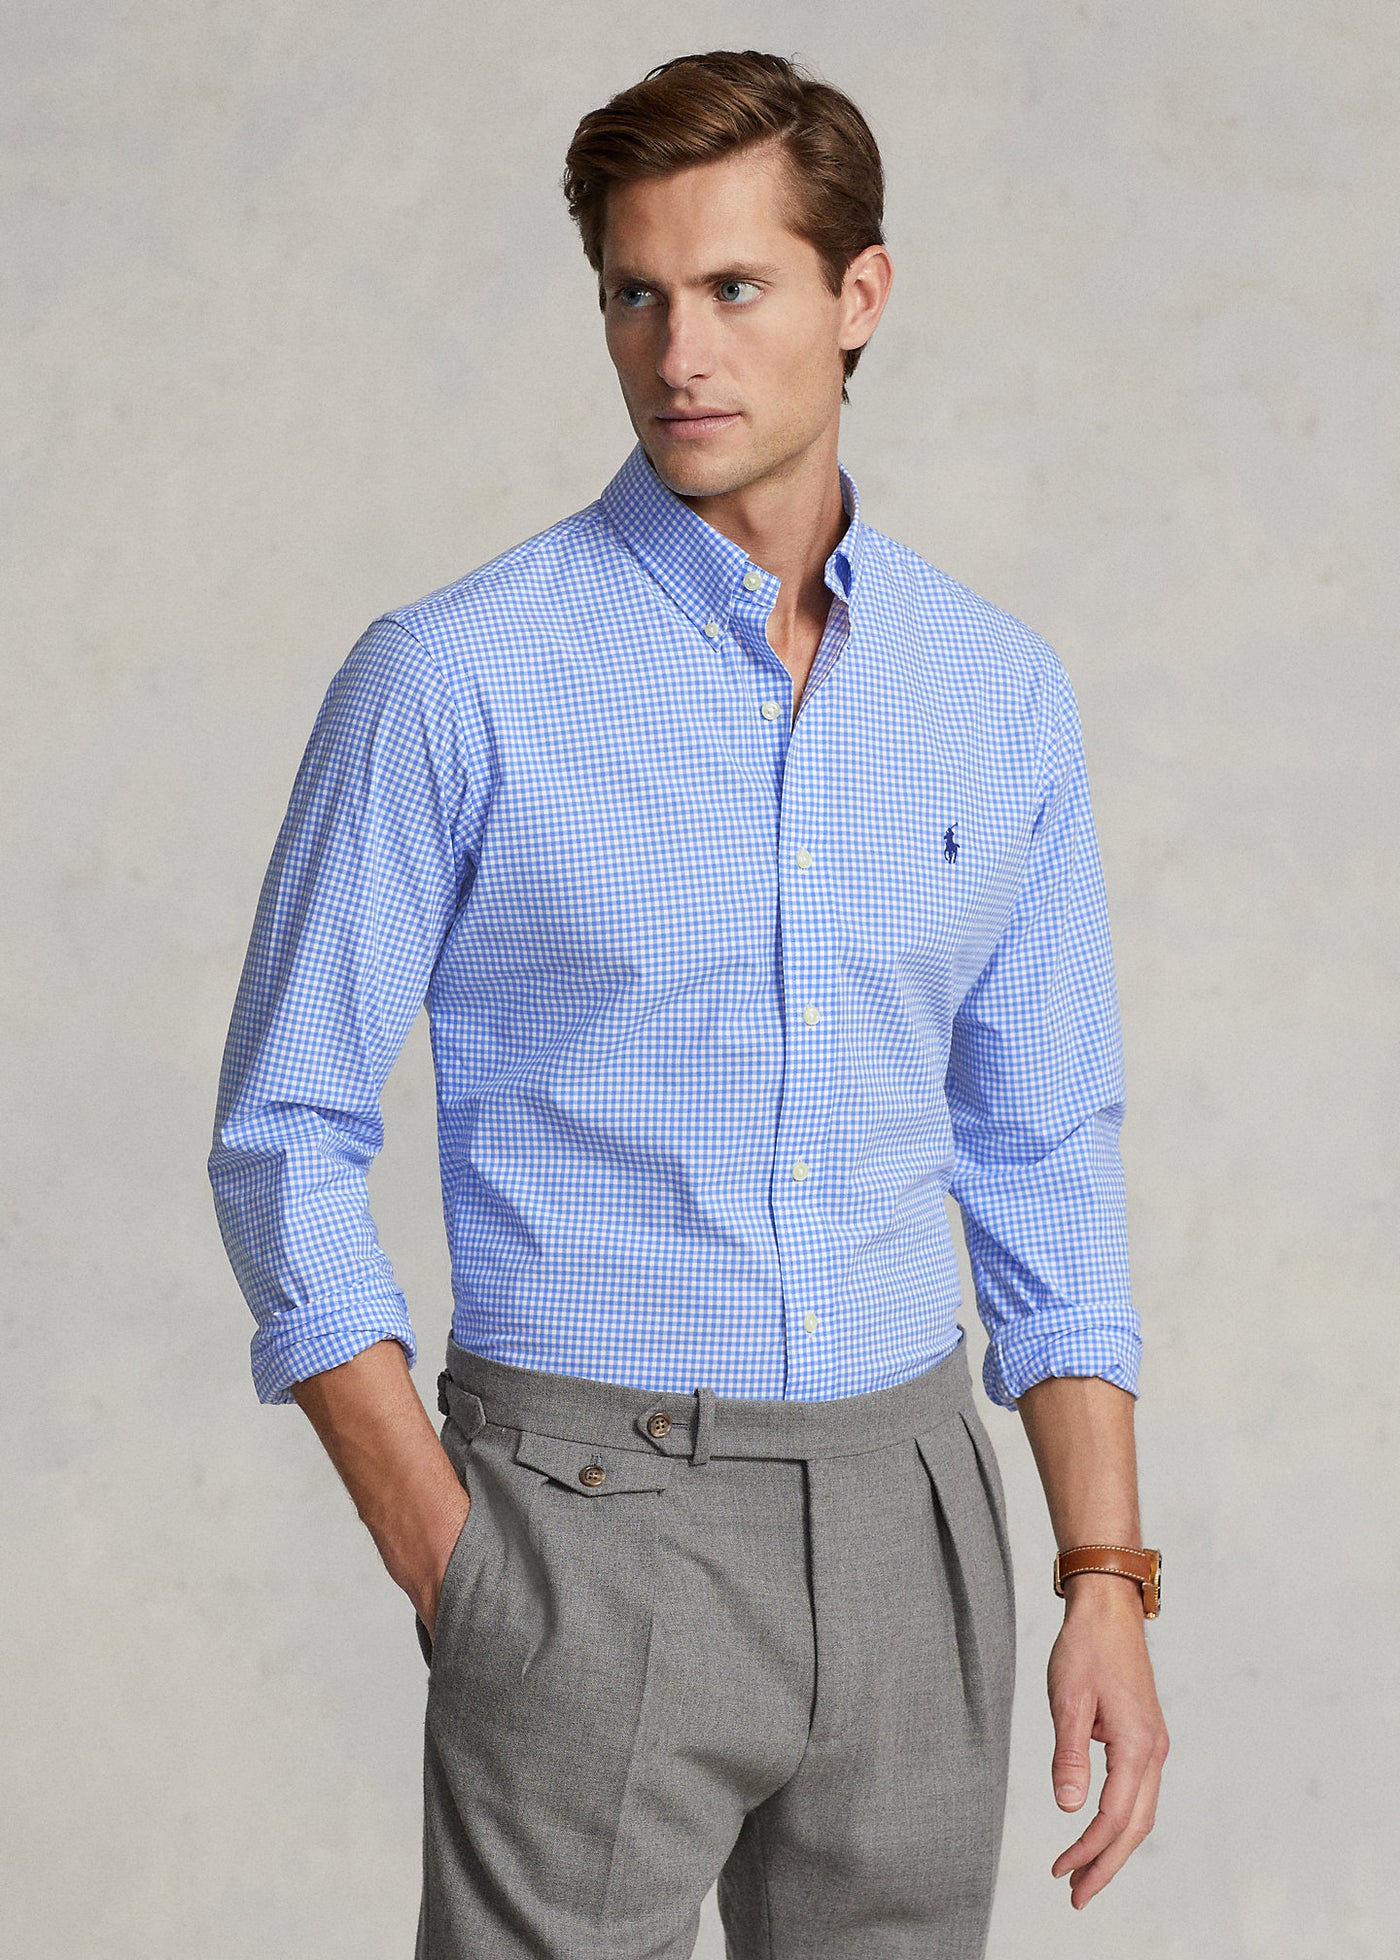 Ralph Lauren Custom Fit Plaid Stretch Poplin Shirt | Light Blue/White